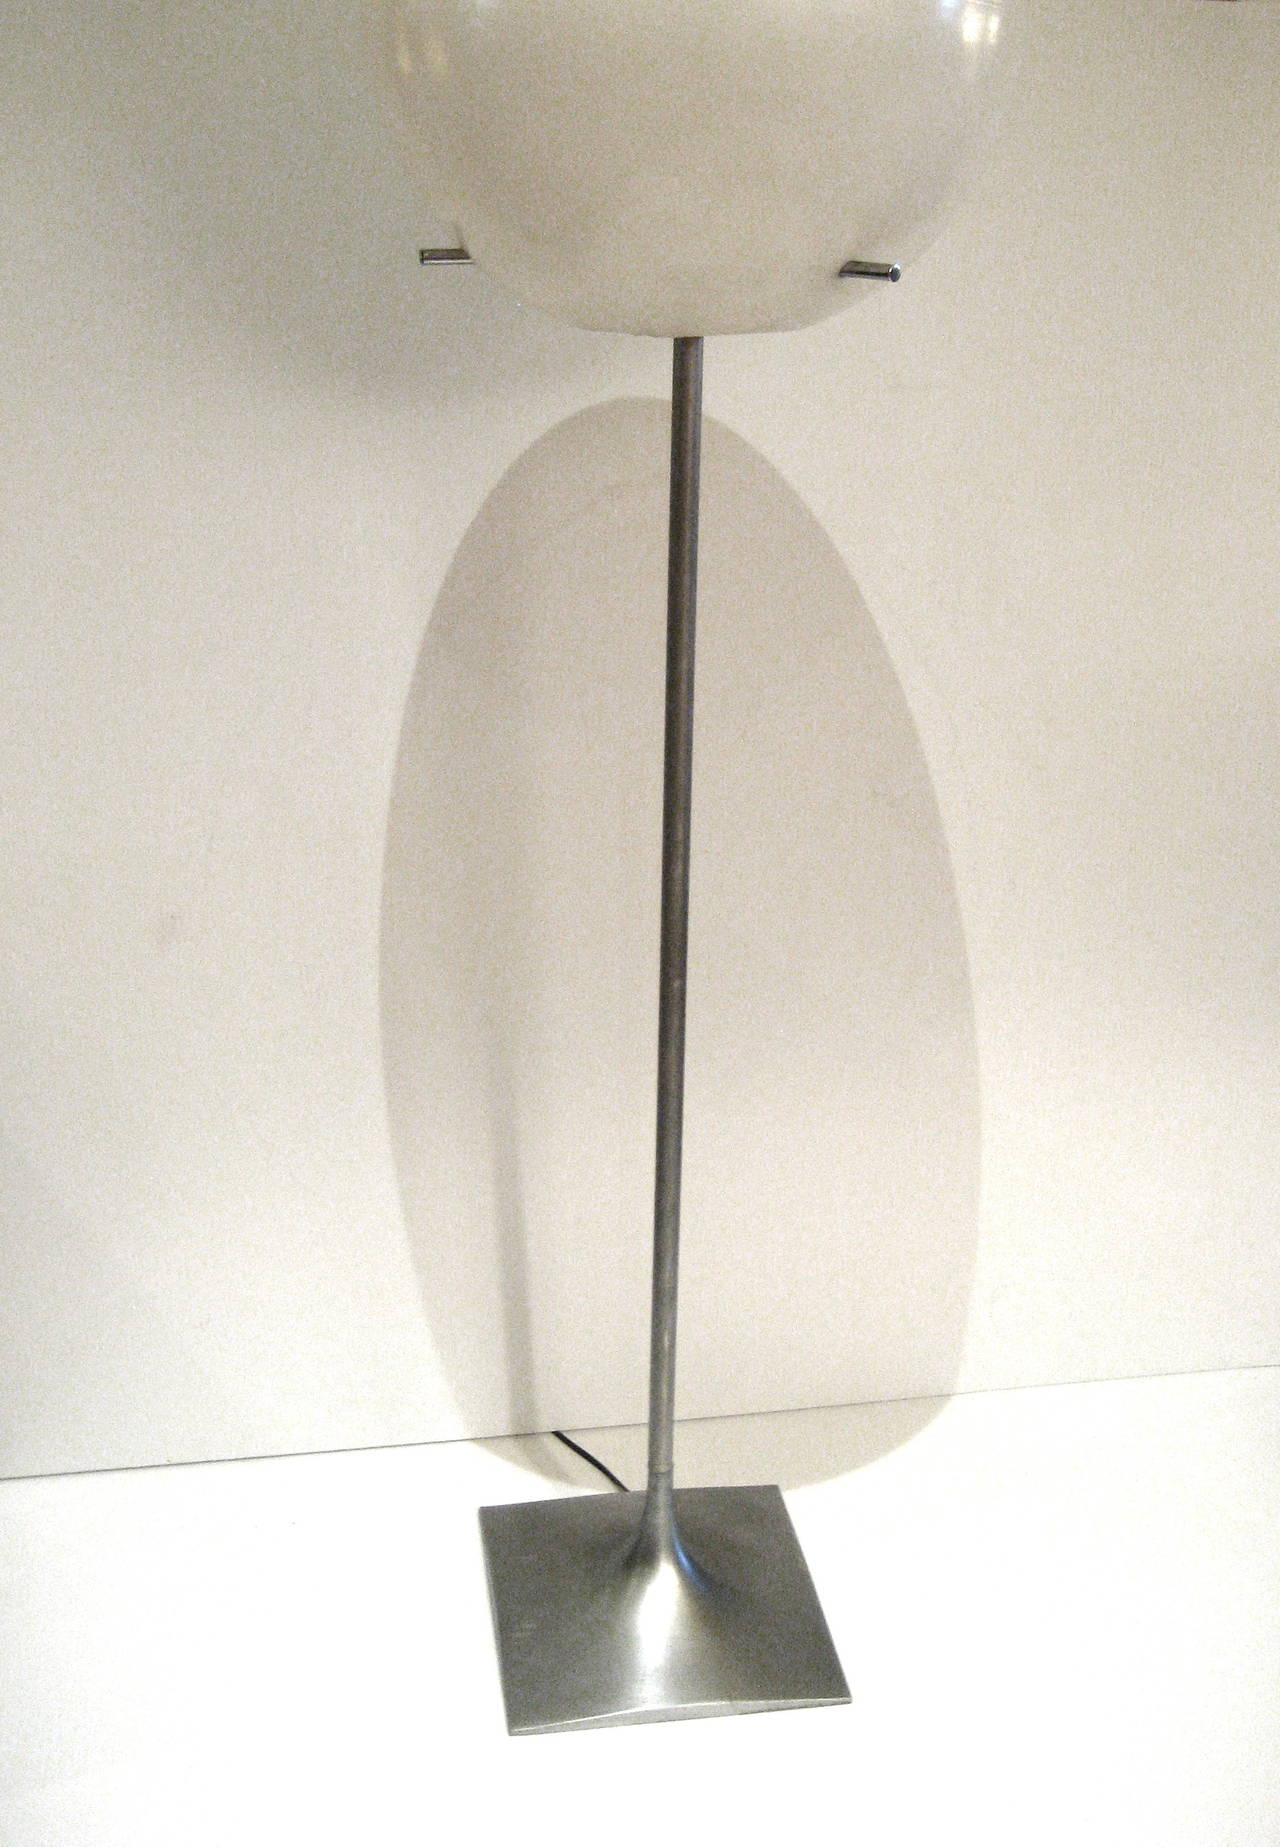 1970s large polypropylene globe, floor lamp designed by Paul Meyen for Habitat sitting on aluminum base with three chrome plugs holding the globe and push off/on switch.